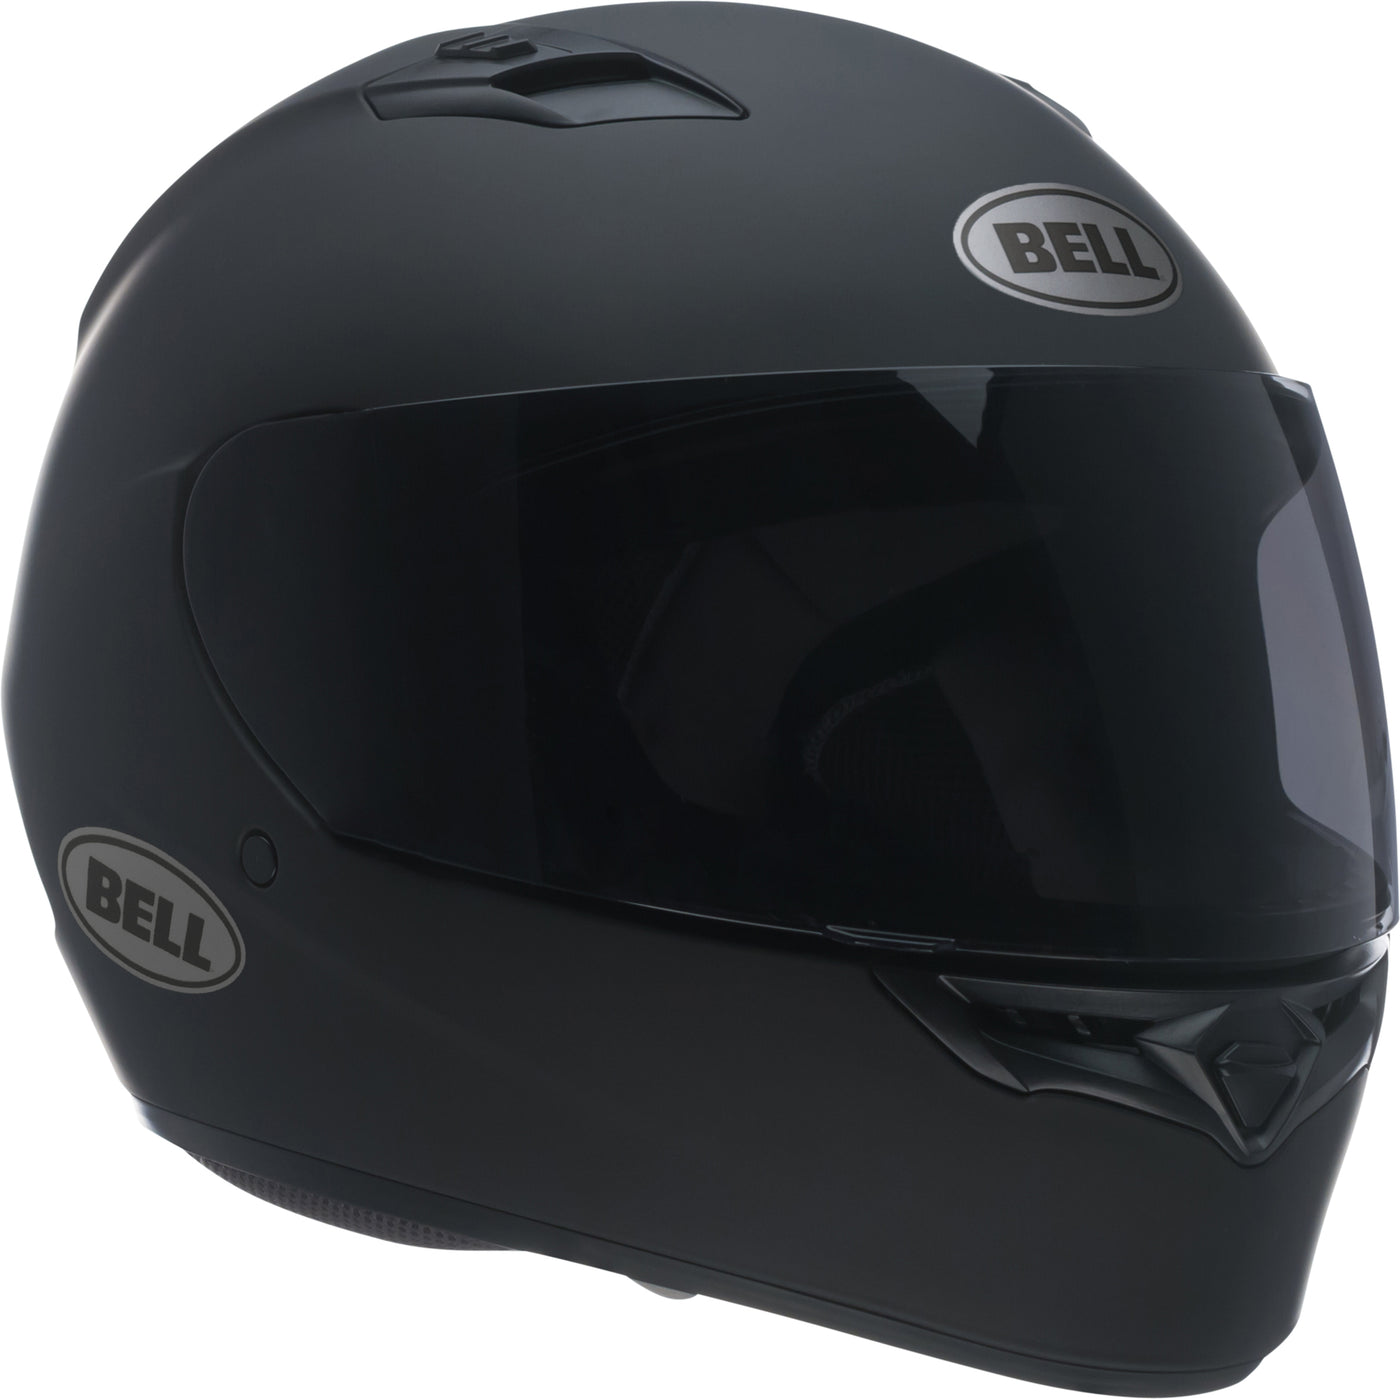 Bell Helmets Qualifier - Matte Black